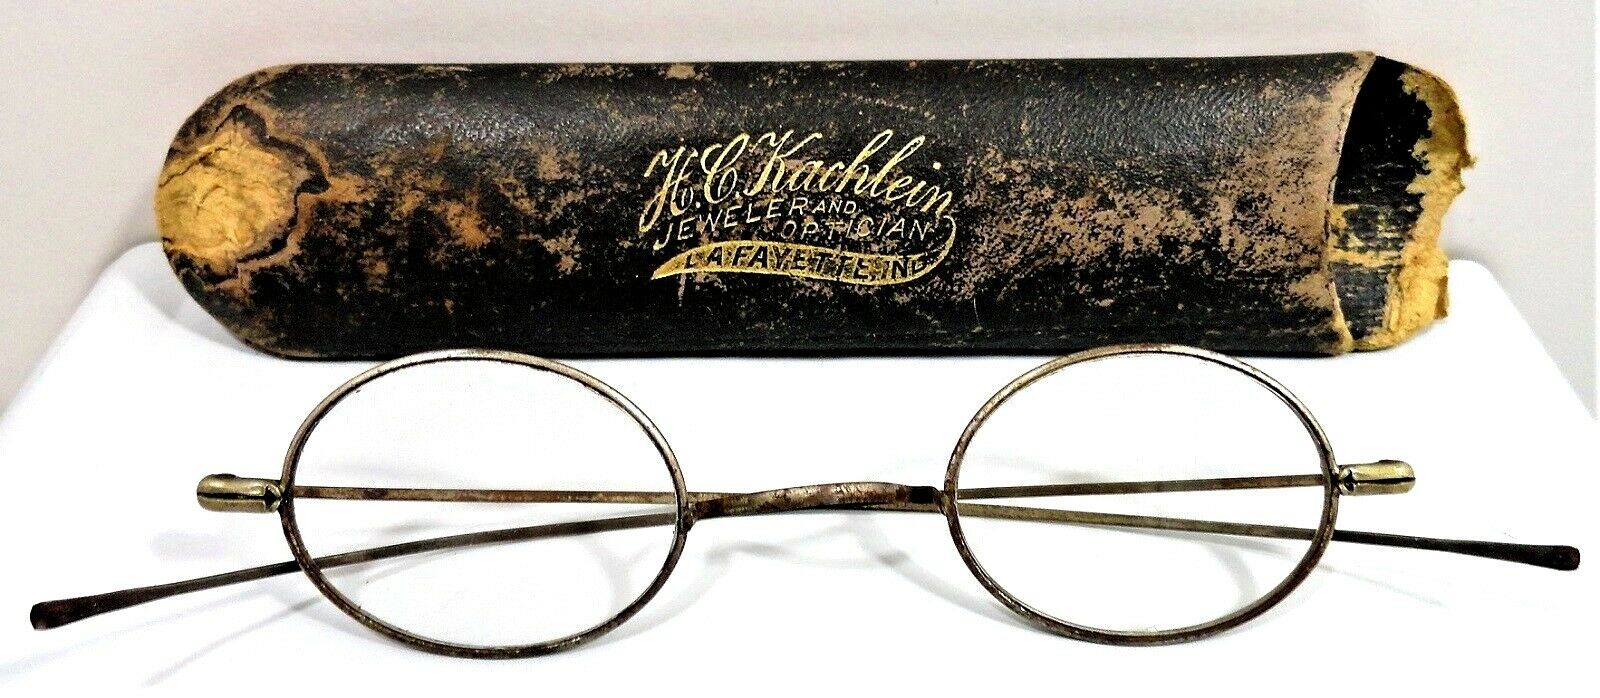 Antique Vintage Reading Glasses with Case